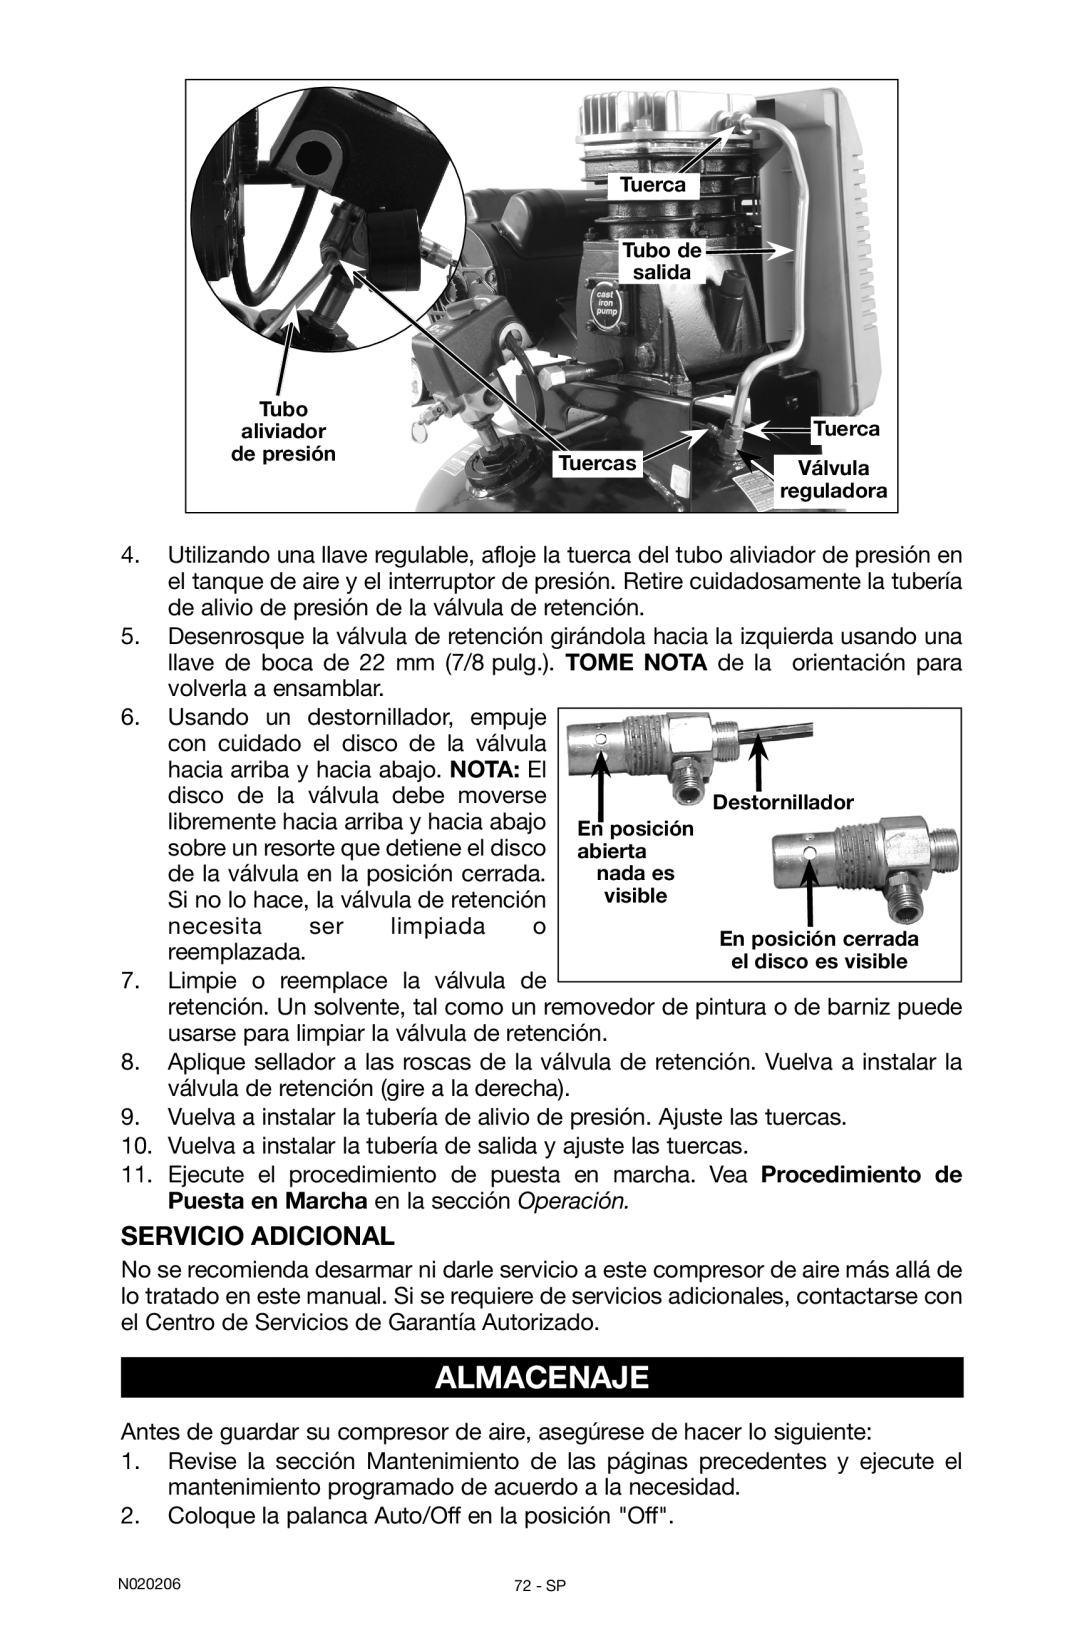 Porter-Cable N020206-NOV08-0, C7501M instruction manual Almacenaje, Servicio Adicional 